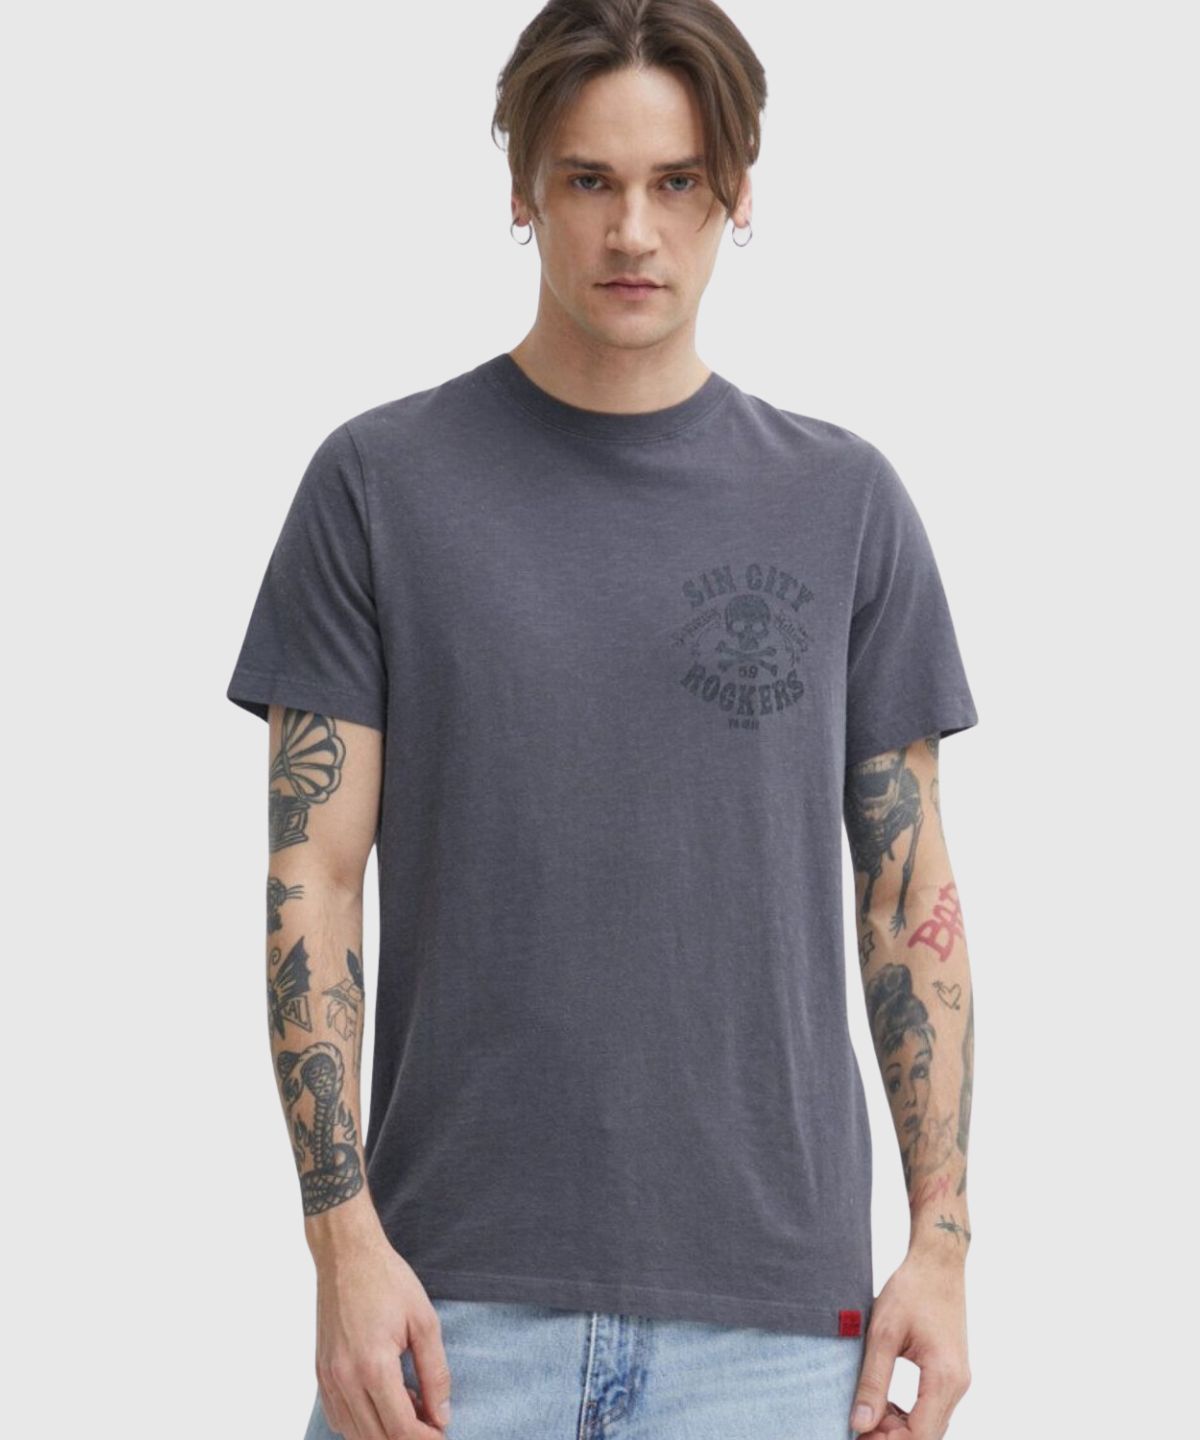 Retro Rocker Graphic T Shirt